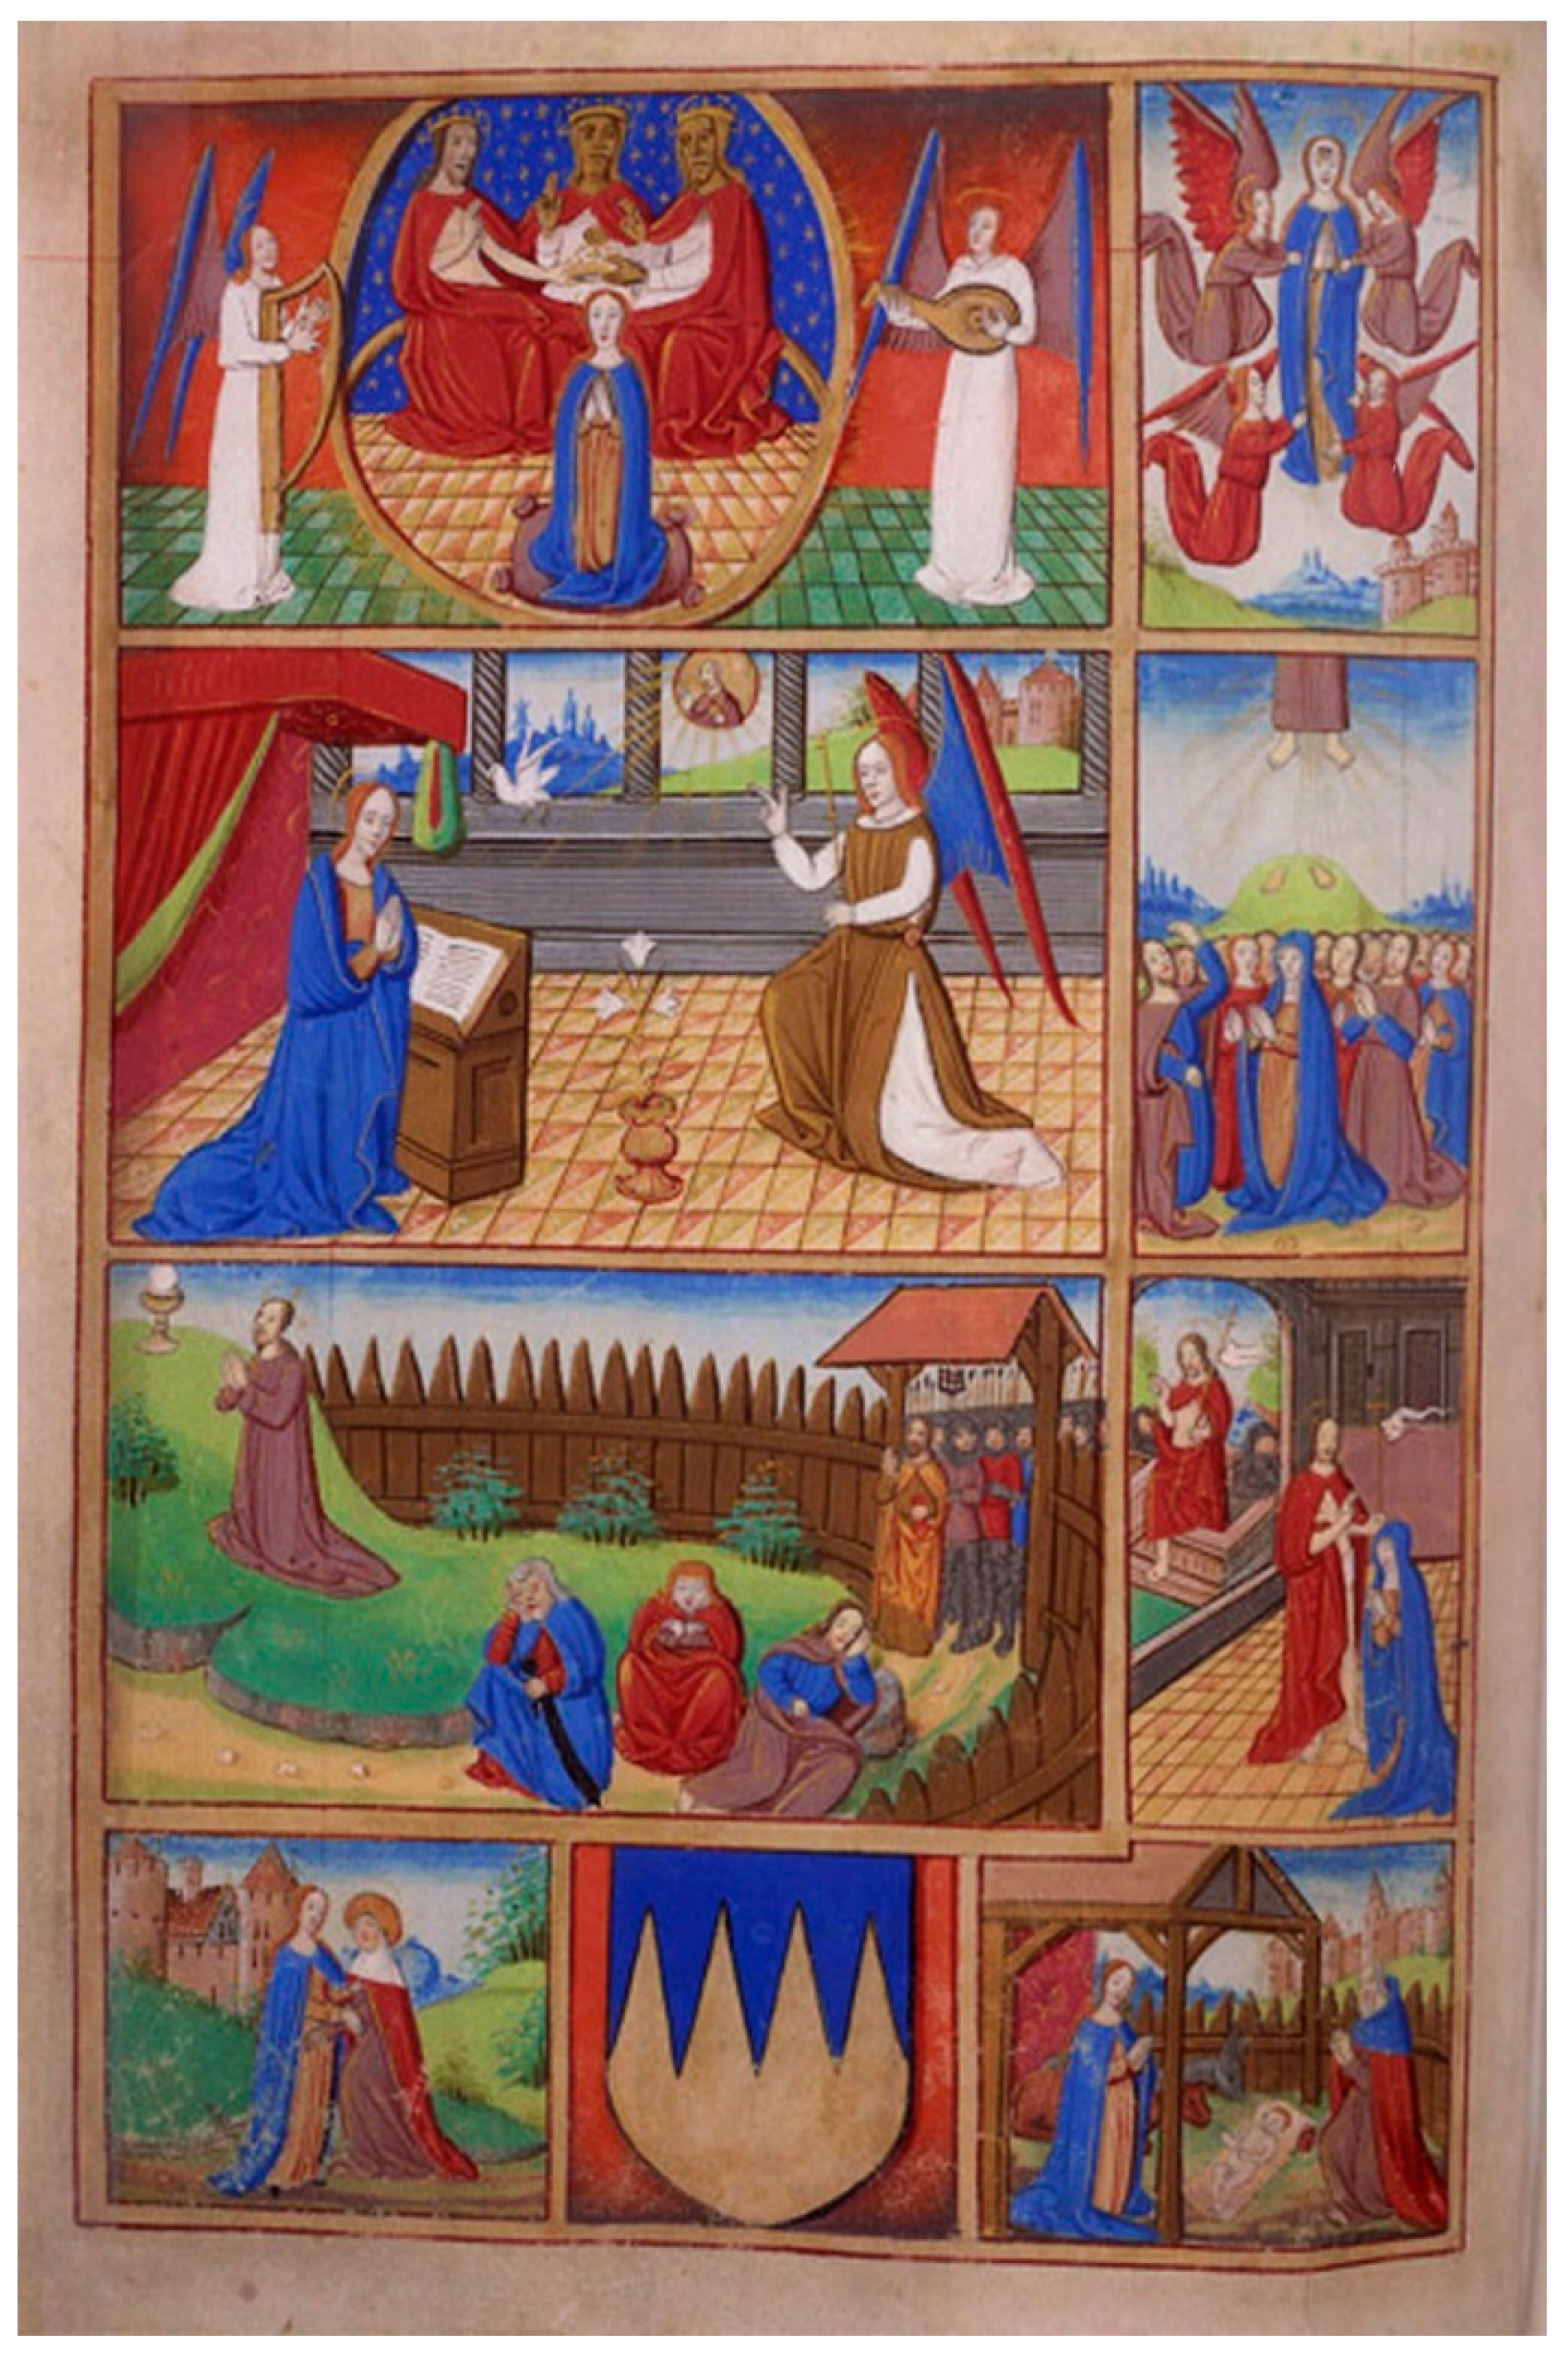 English: British Library blog Miniature of the martyrdom of Thomas